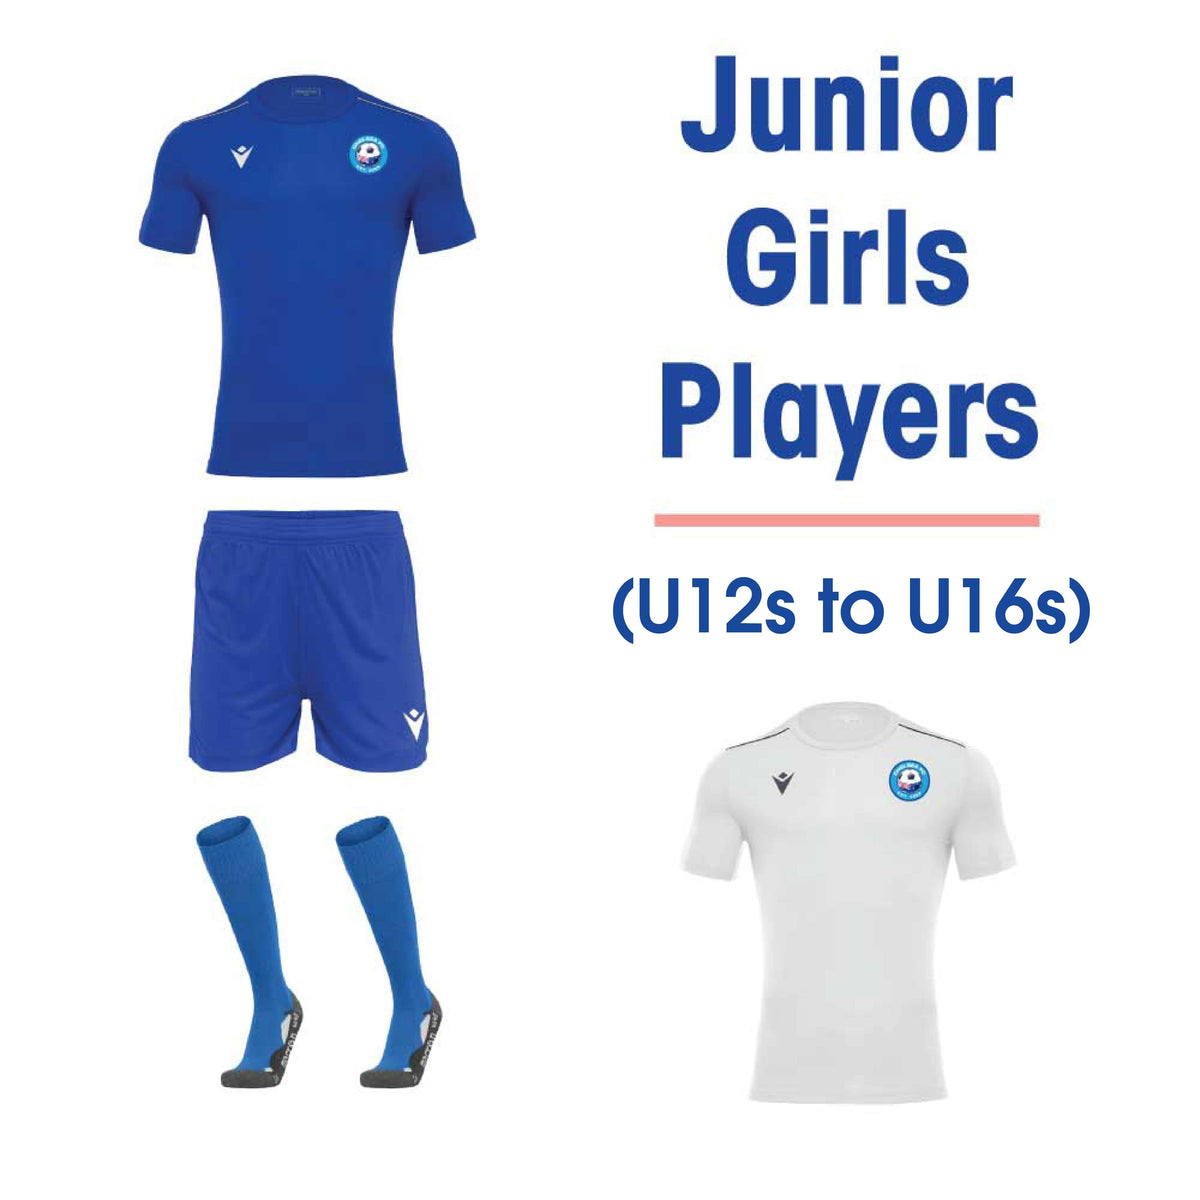 CHELSEA FC - PLAYER KIT - Junior Girls Players (U12 to U16)